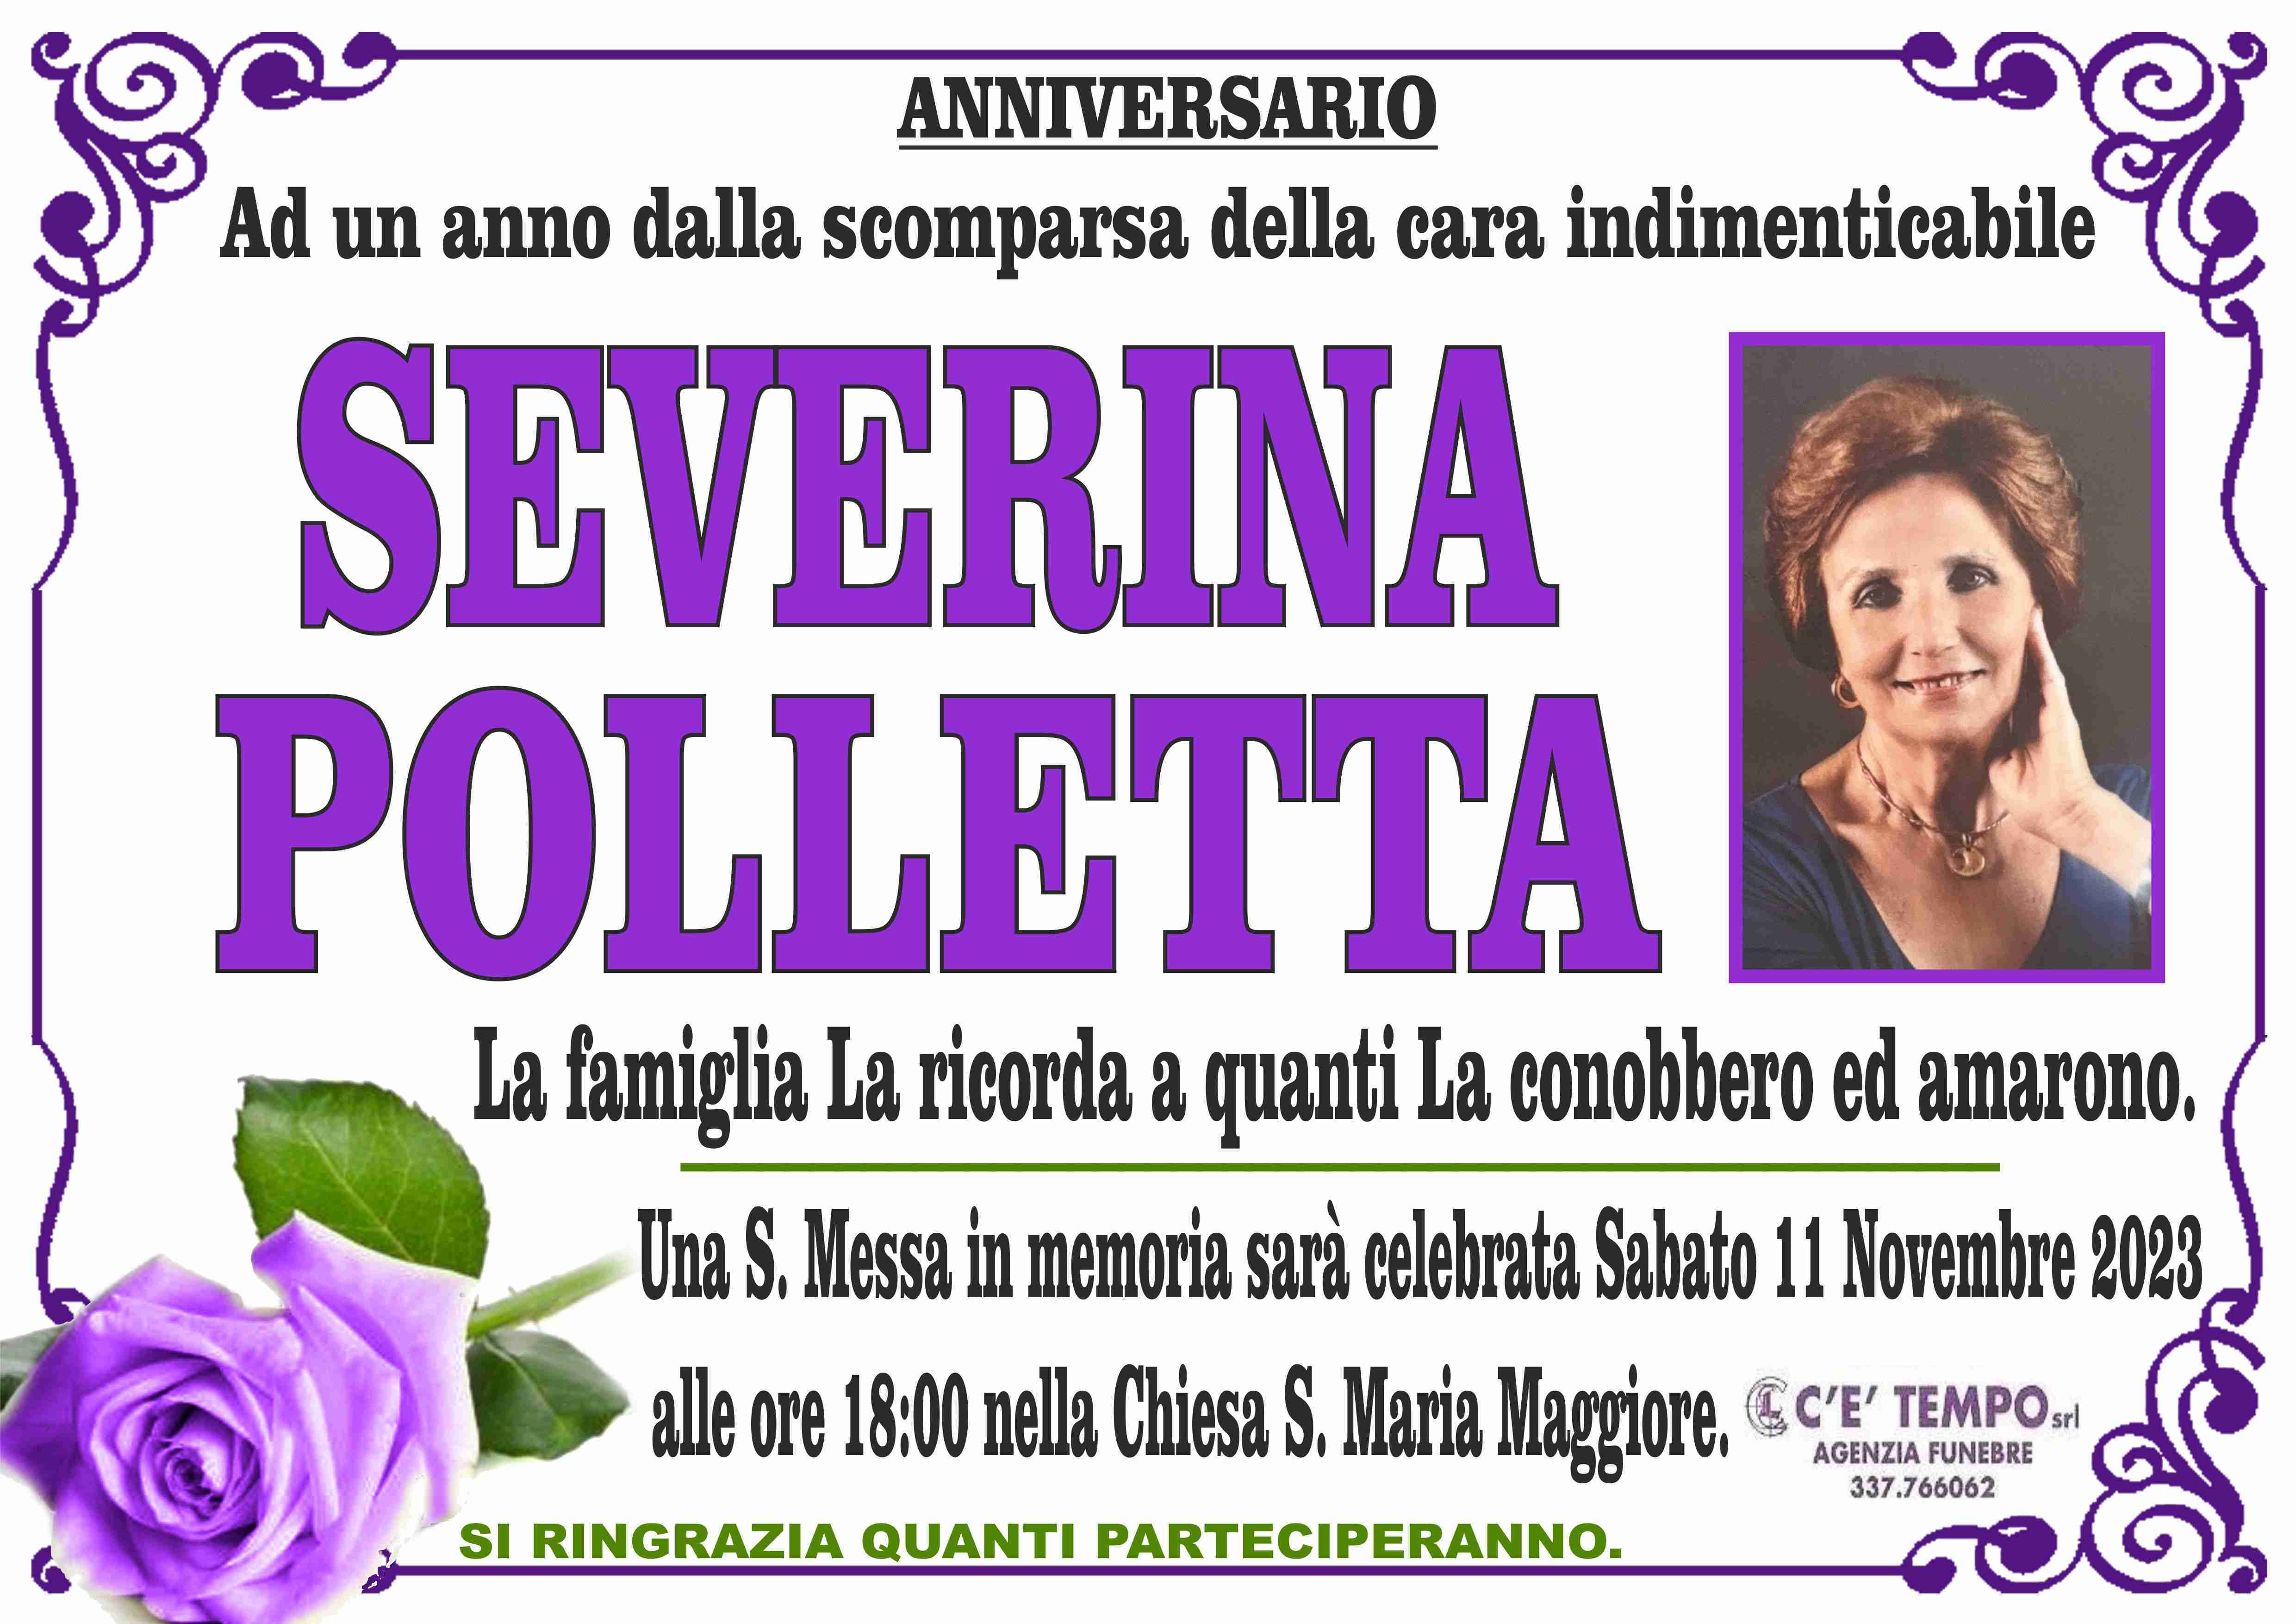 Severina Polletta